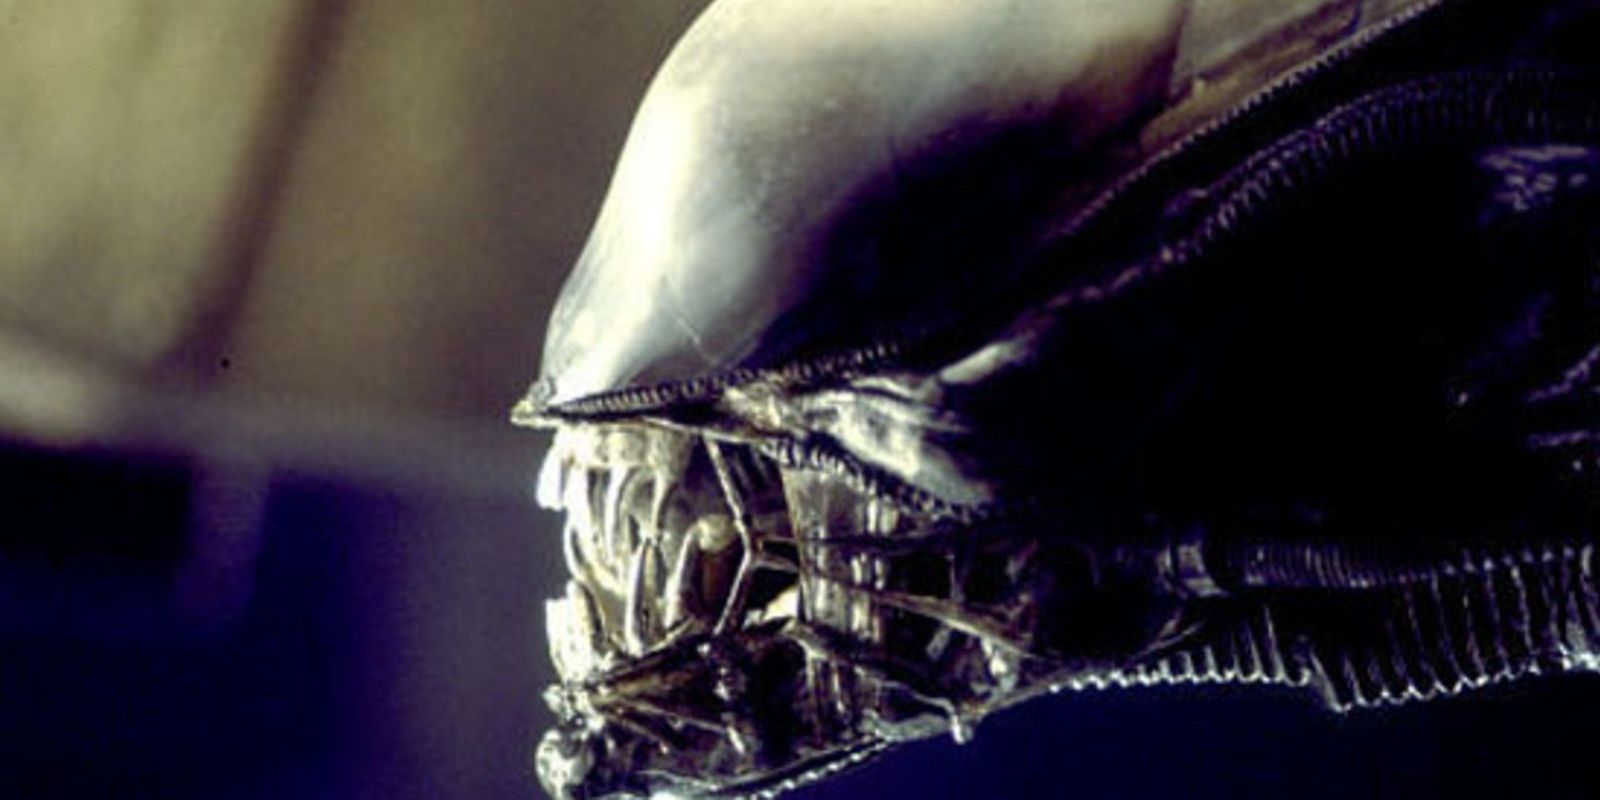 10 Best Dystopian SciFi Films (According To IMDb)